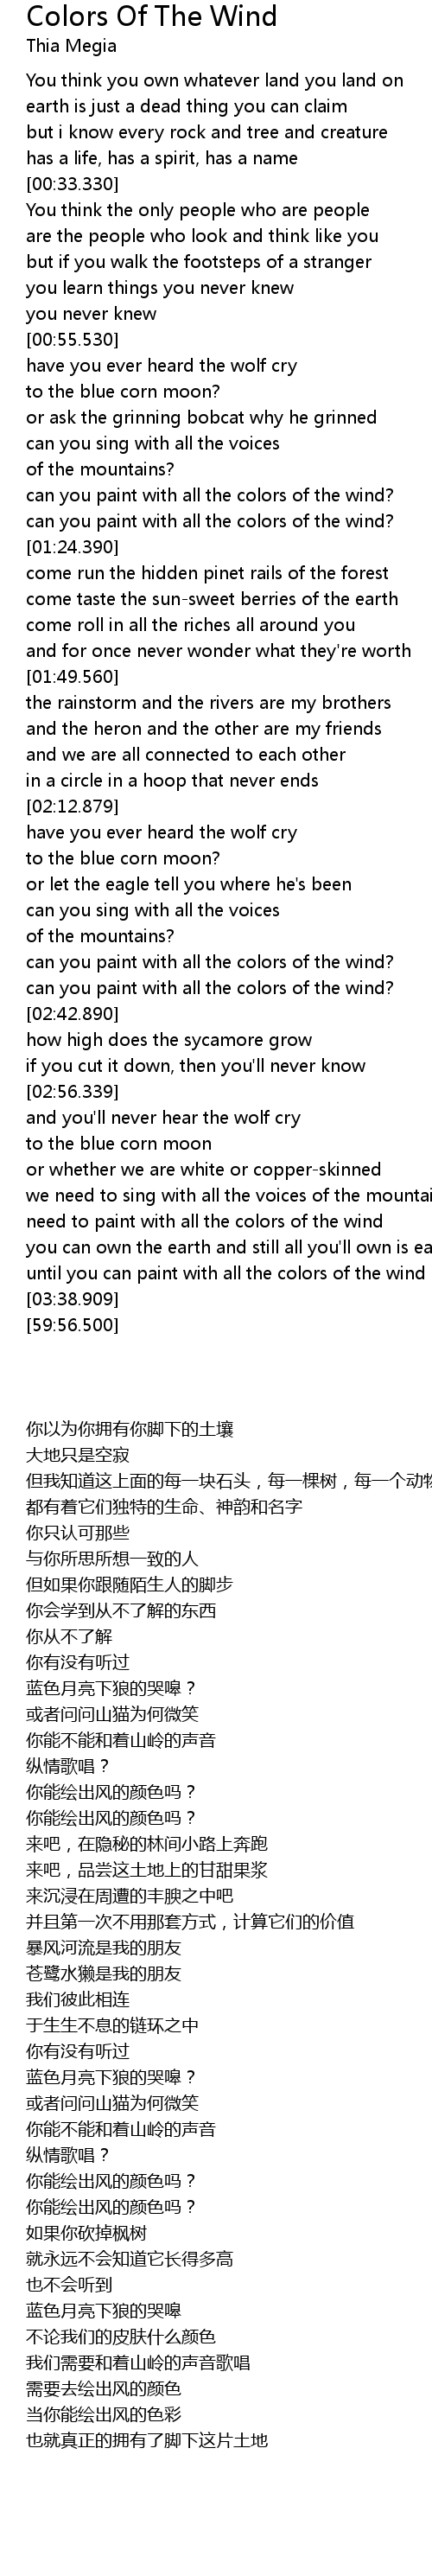 Colors Of The Wind Lyrics Follow Lyrics